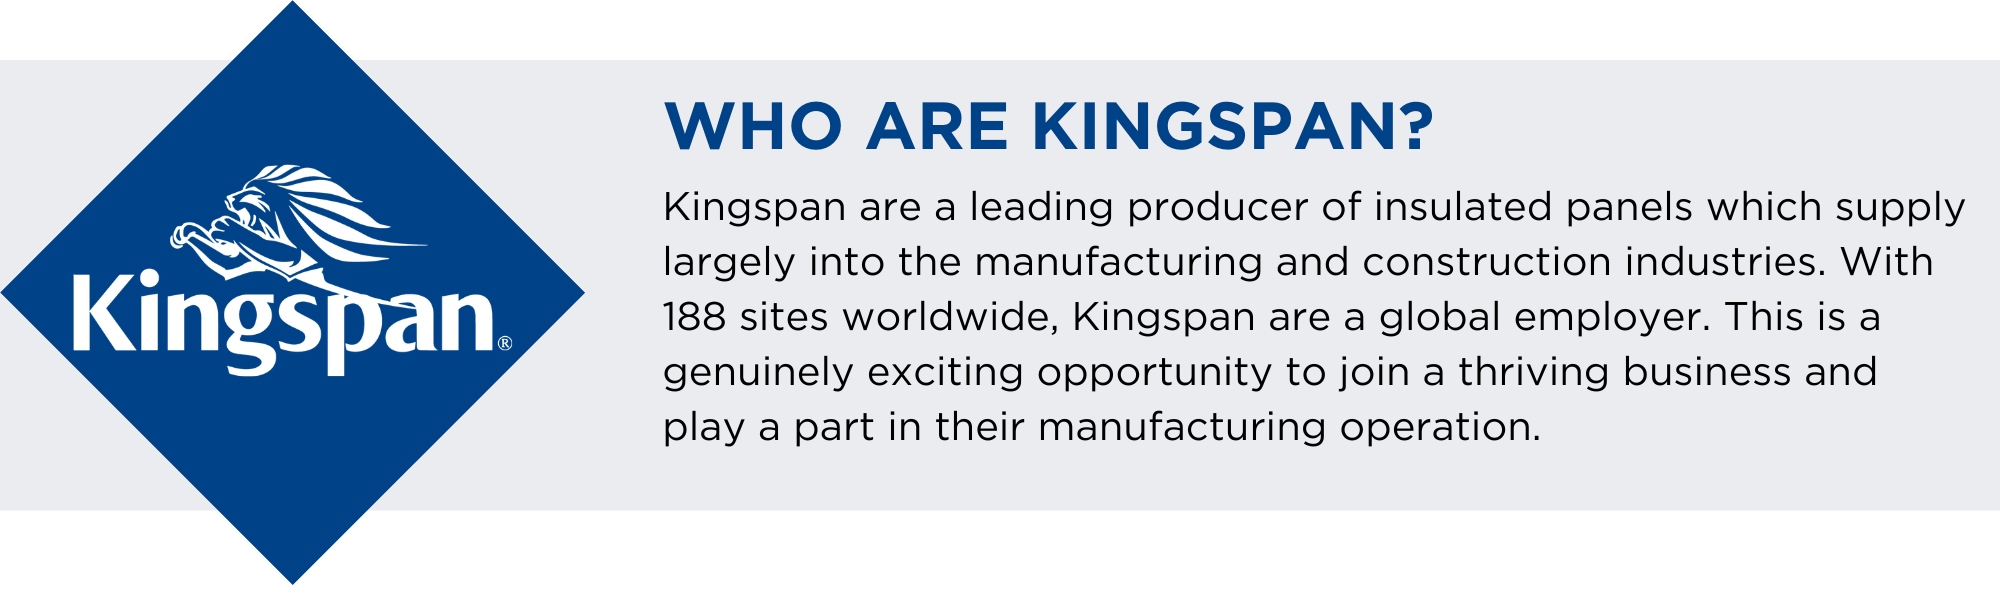 Who are Kingspan